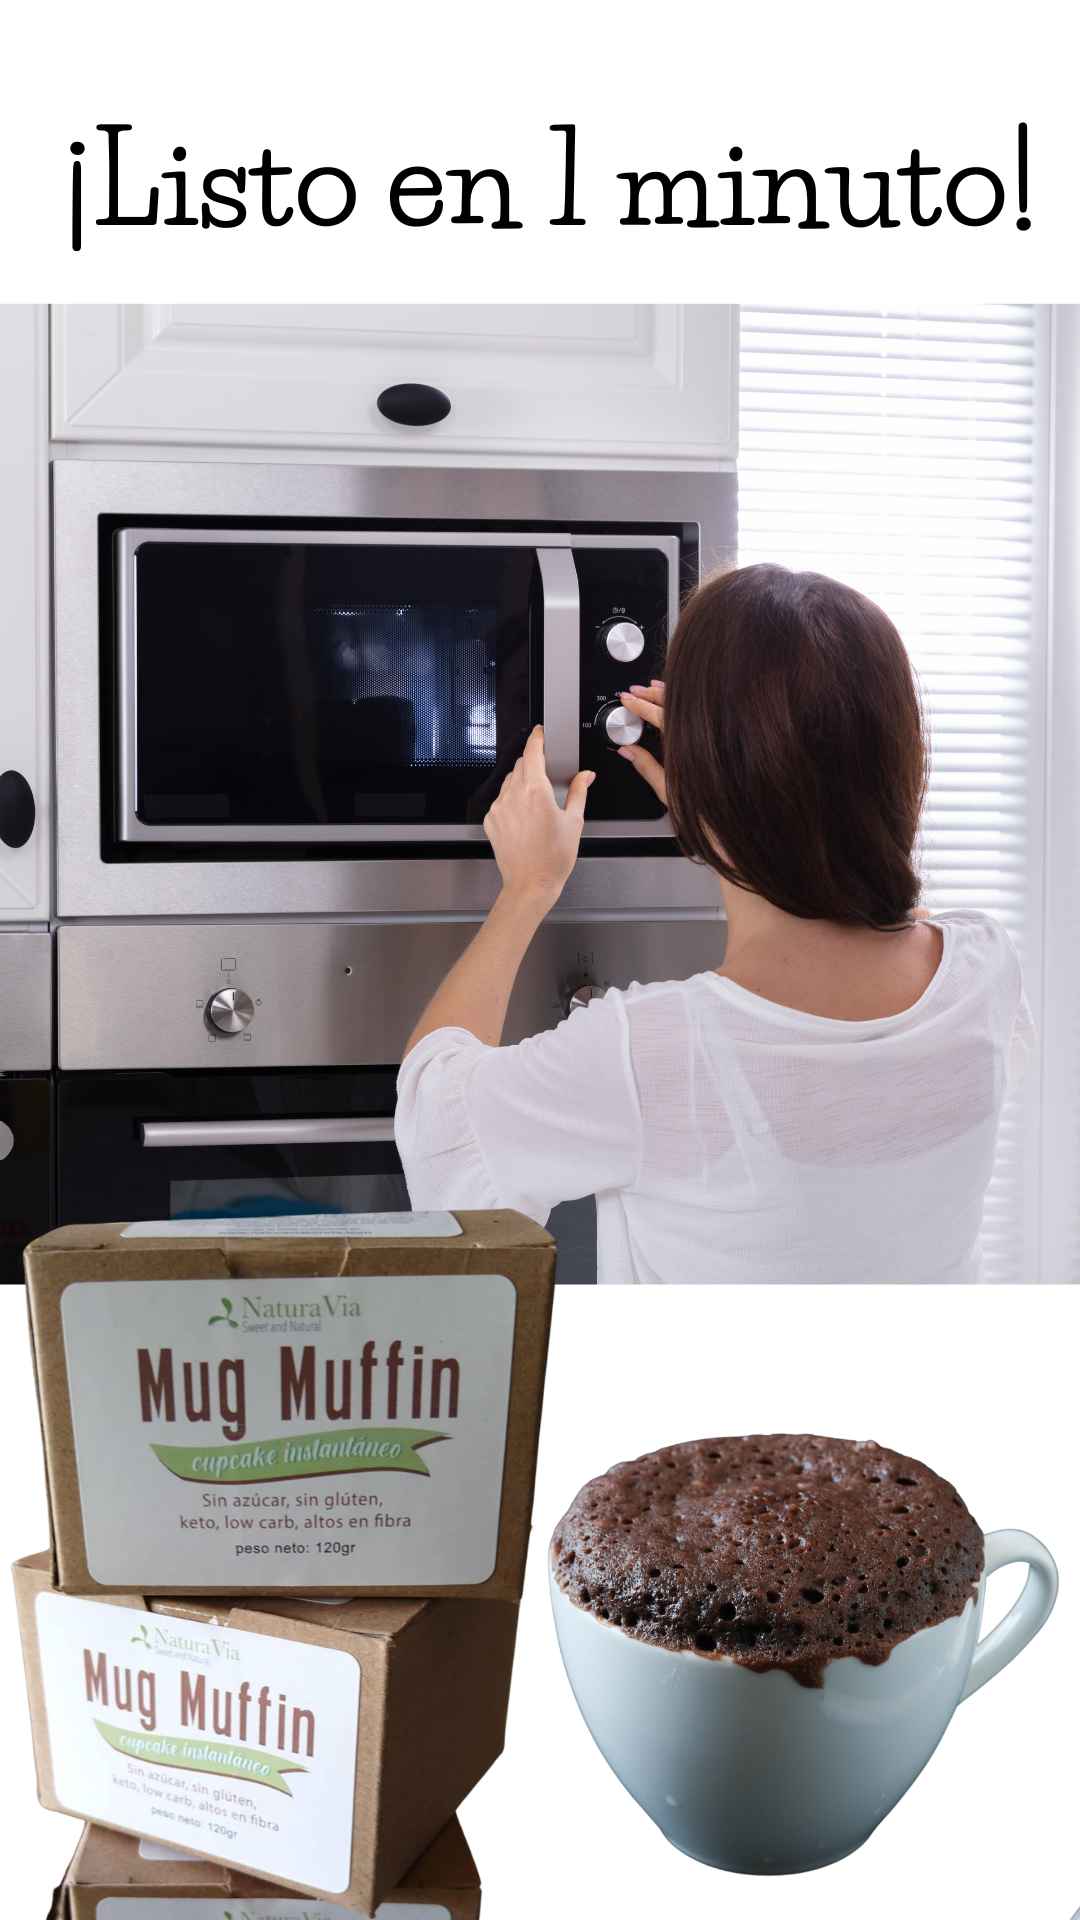 Mug Muffin Keto - 4 Instant Cupcakes